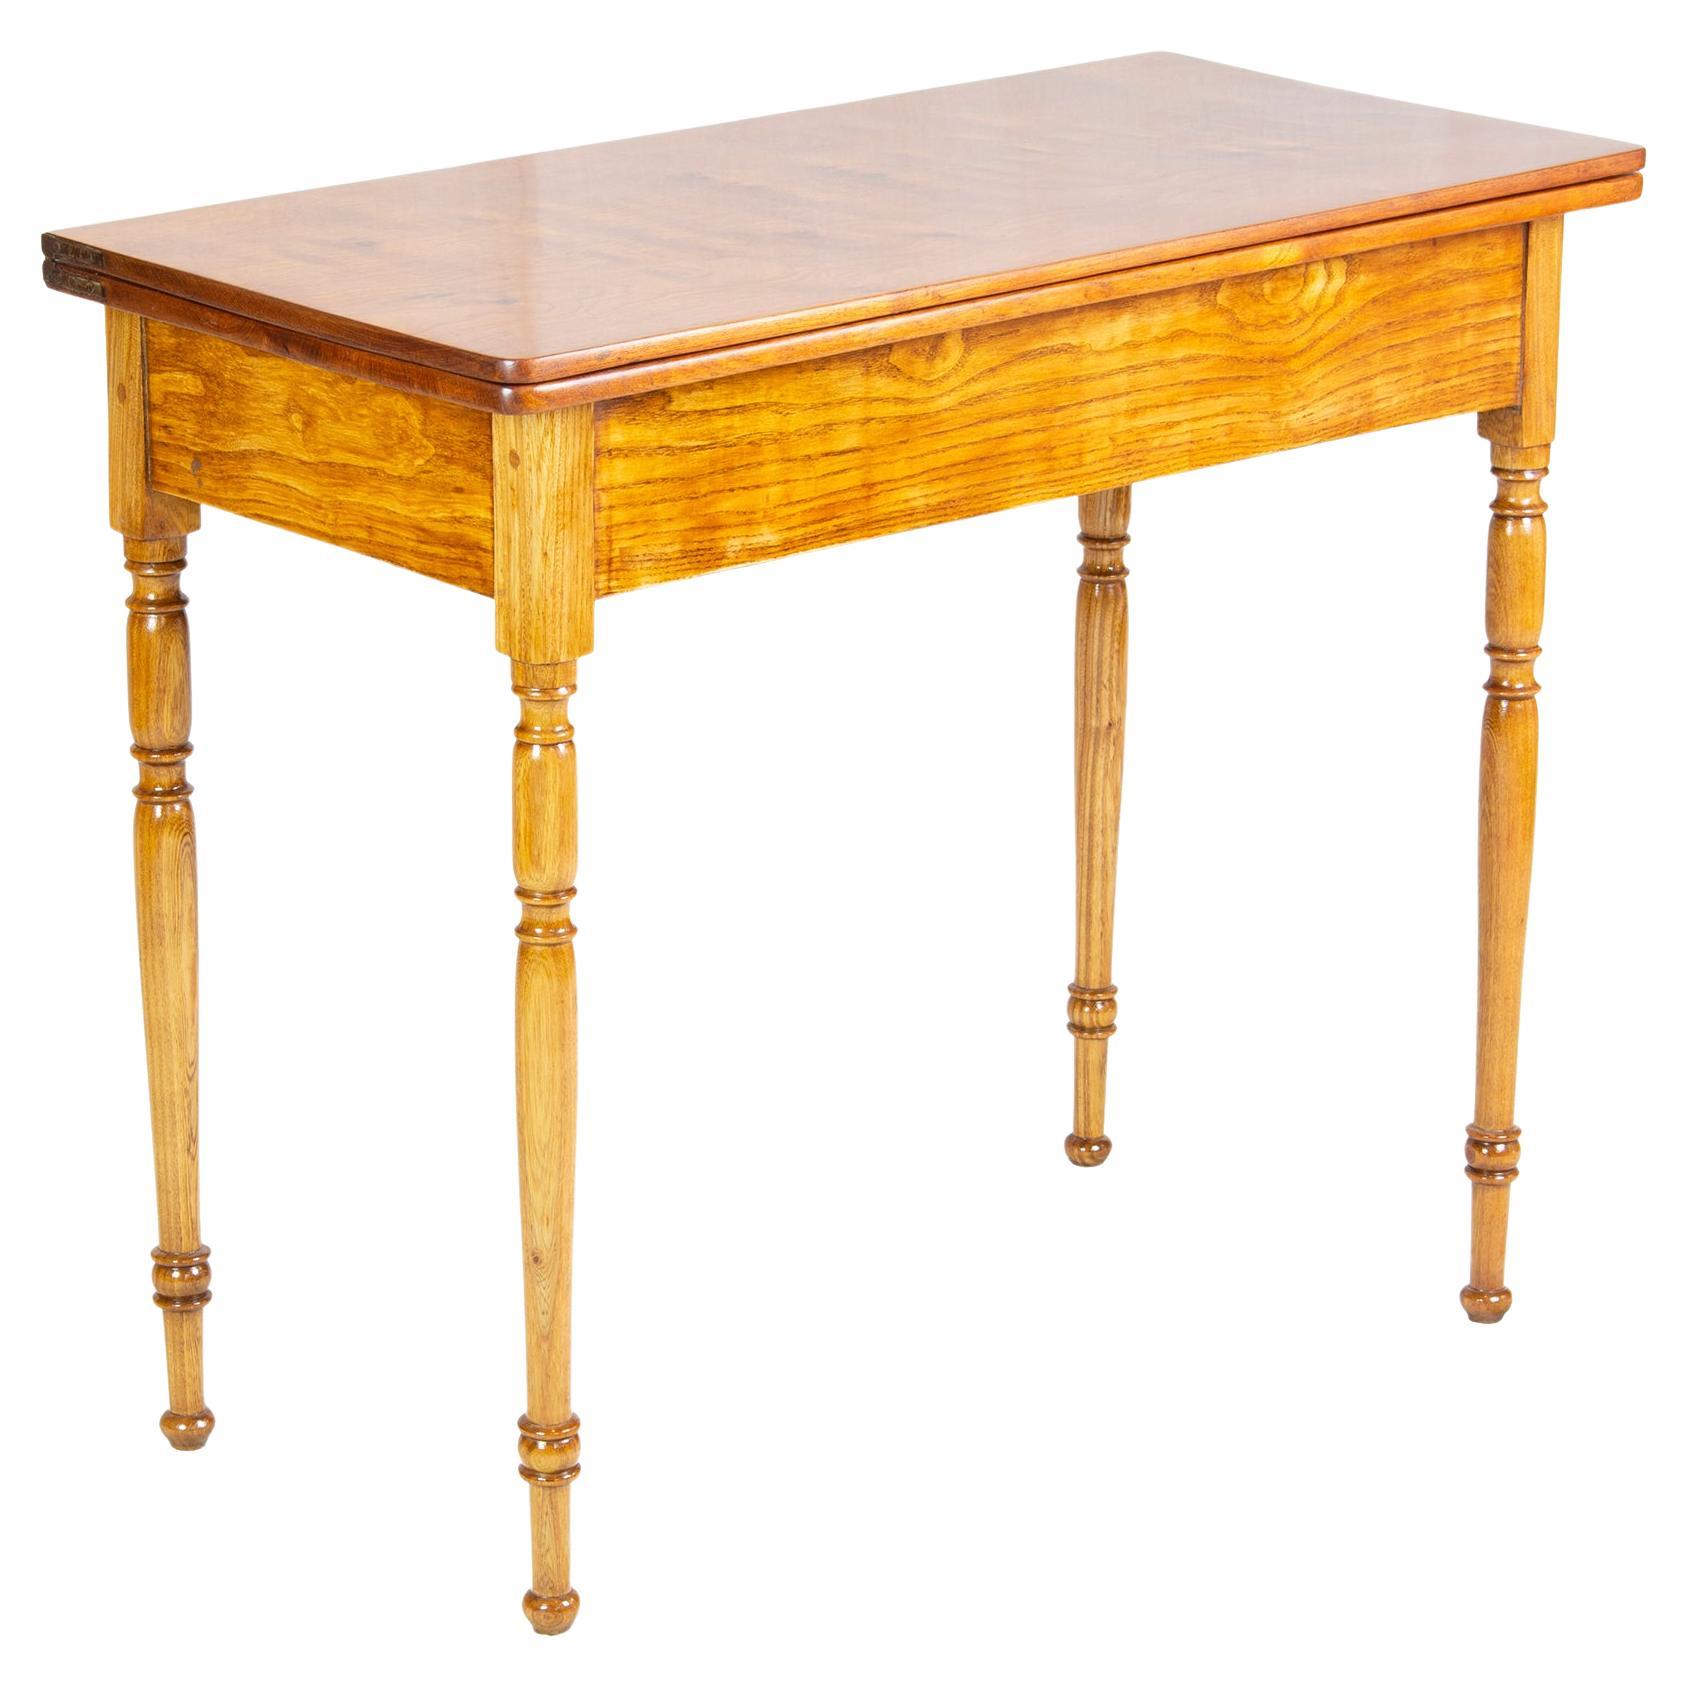 19th Century, Ash Wood Late Biedermeier Game Table